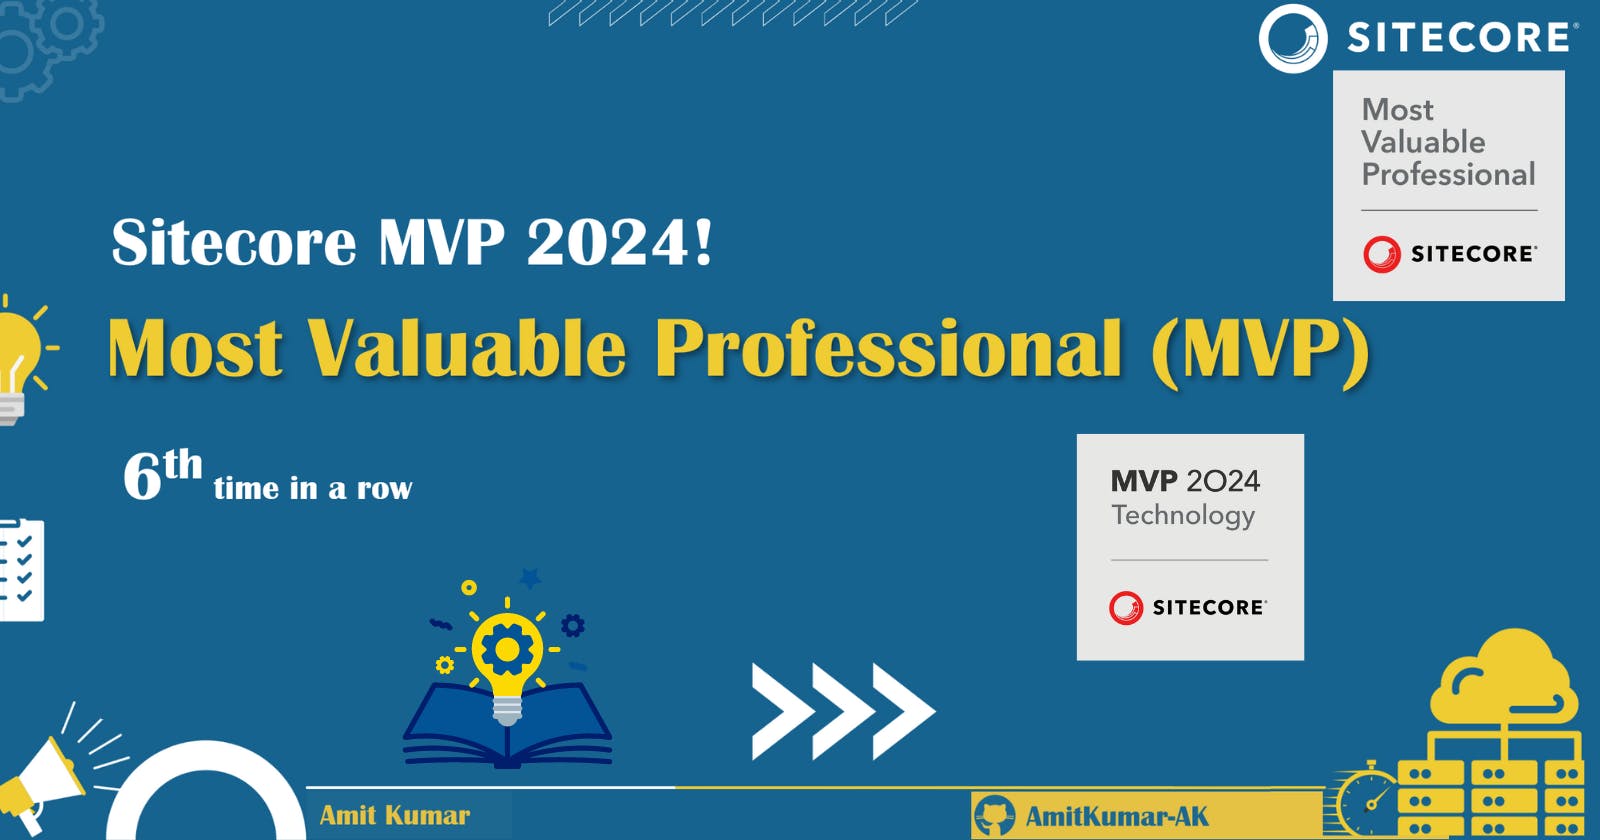 Sitecore Technology MVP 2024!